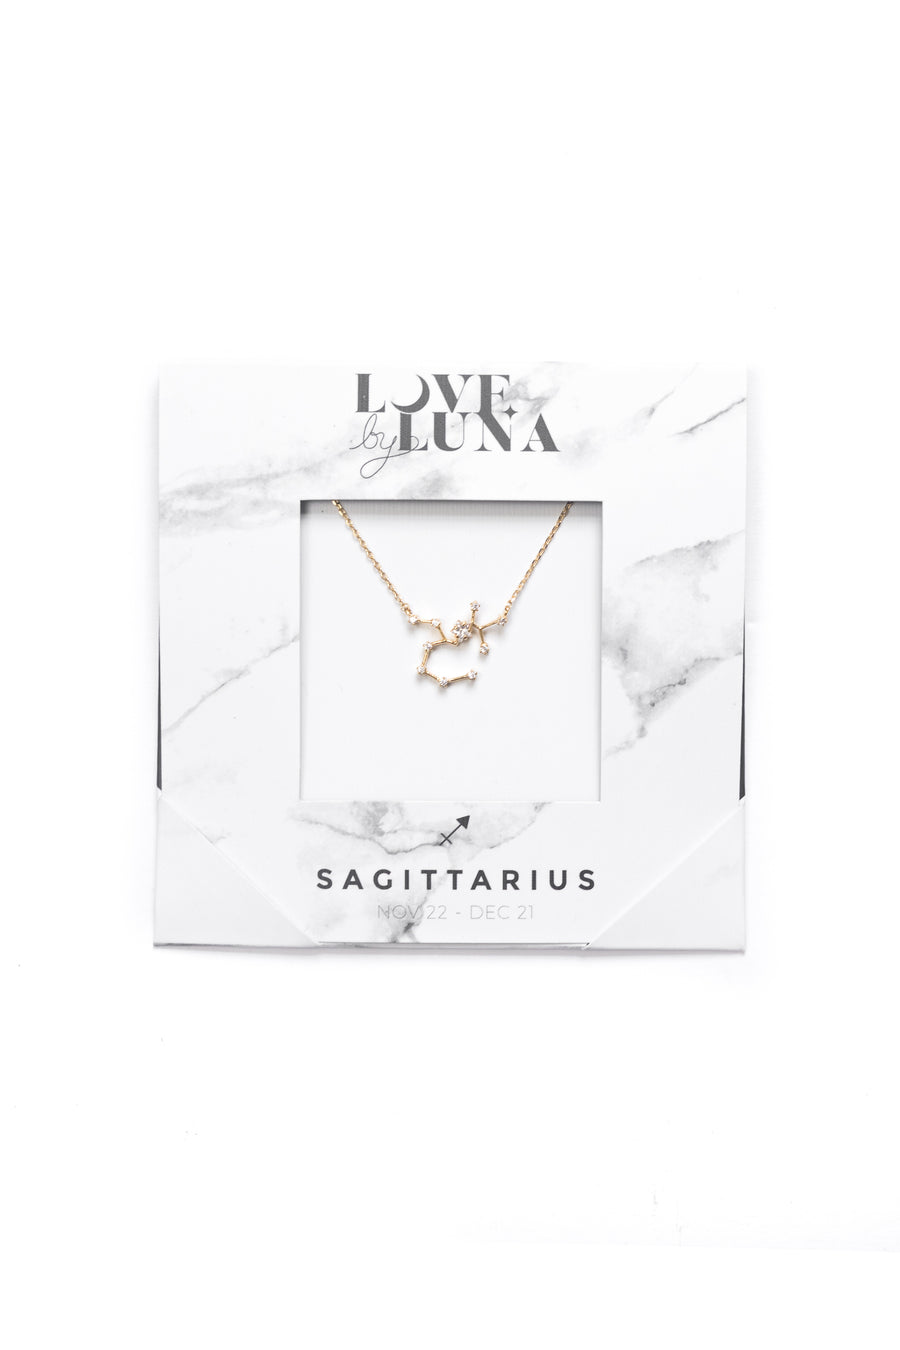 Sagittarius Constellation Necklace - Gold & Silver (14 Karat Gold / 24 Karat White Gold Dipped Options)